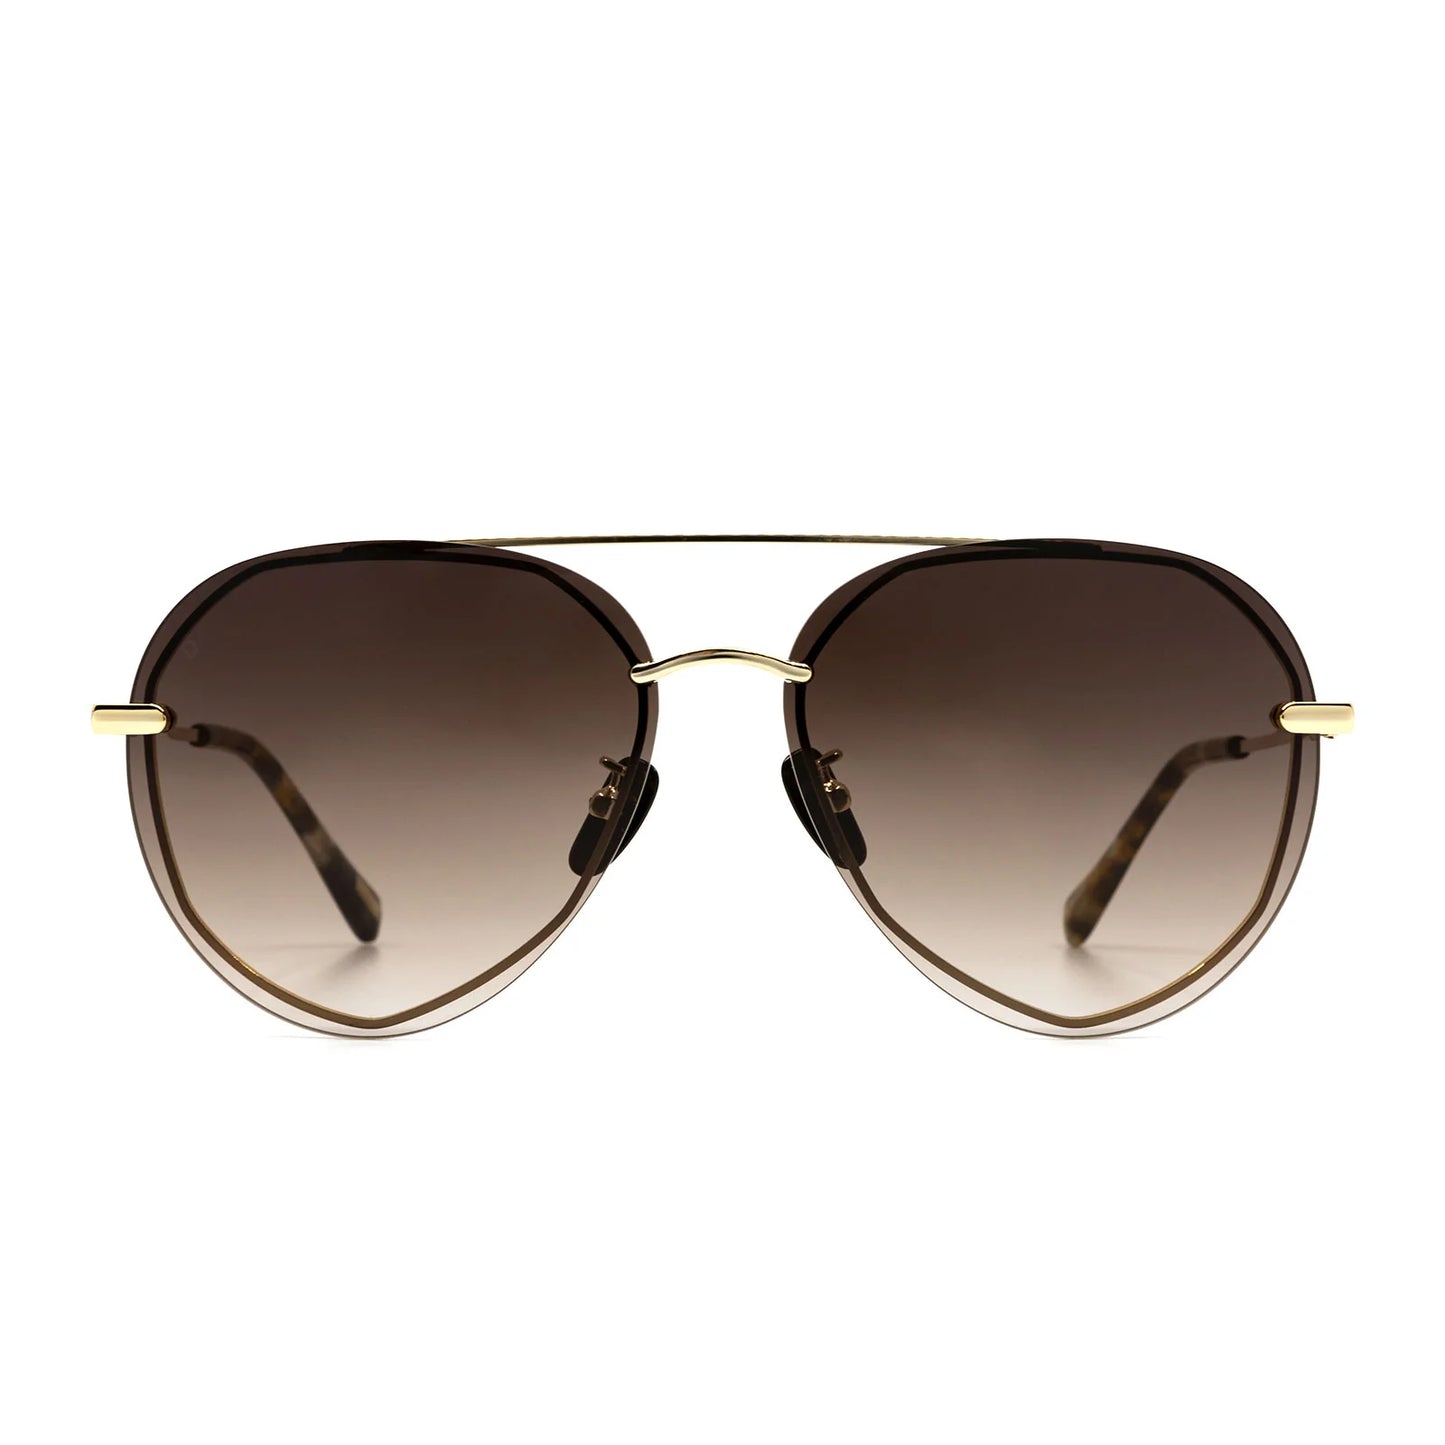 DIFF Eyewear - Lenox - Gold Sea Tortoise Tips Brown Gradient Sunglasses